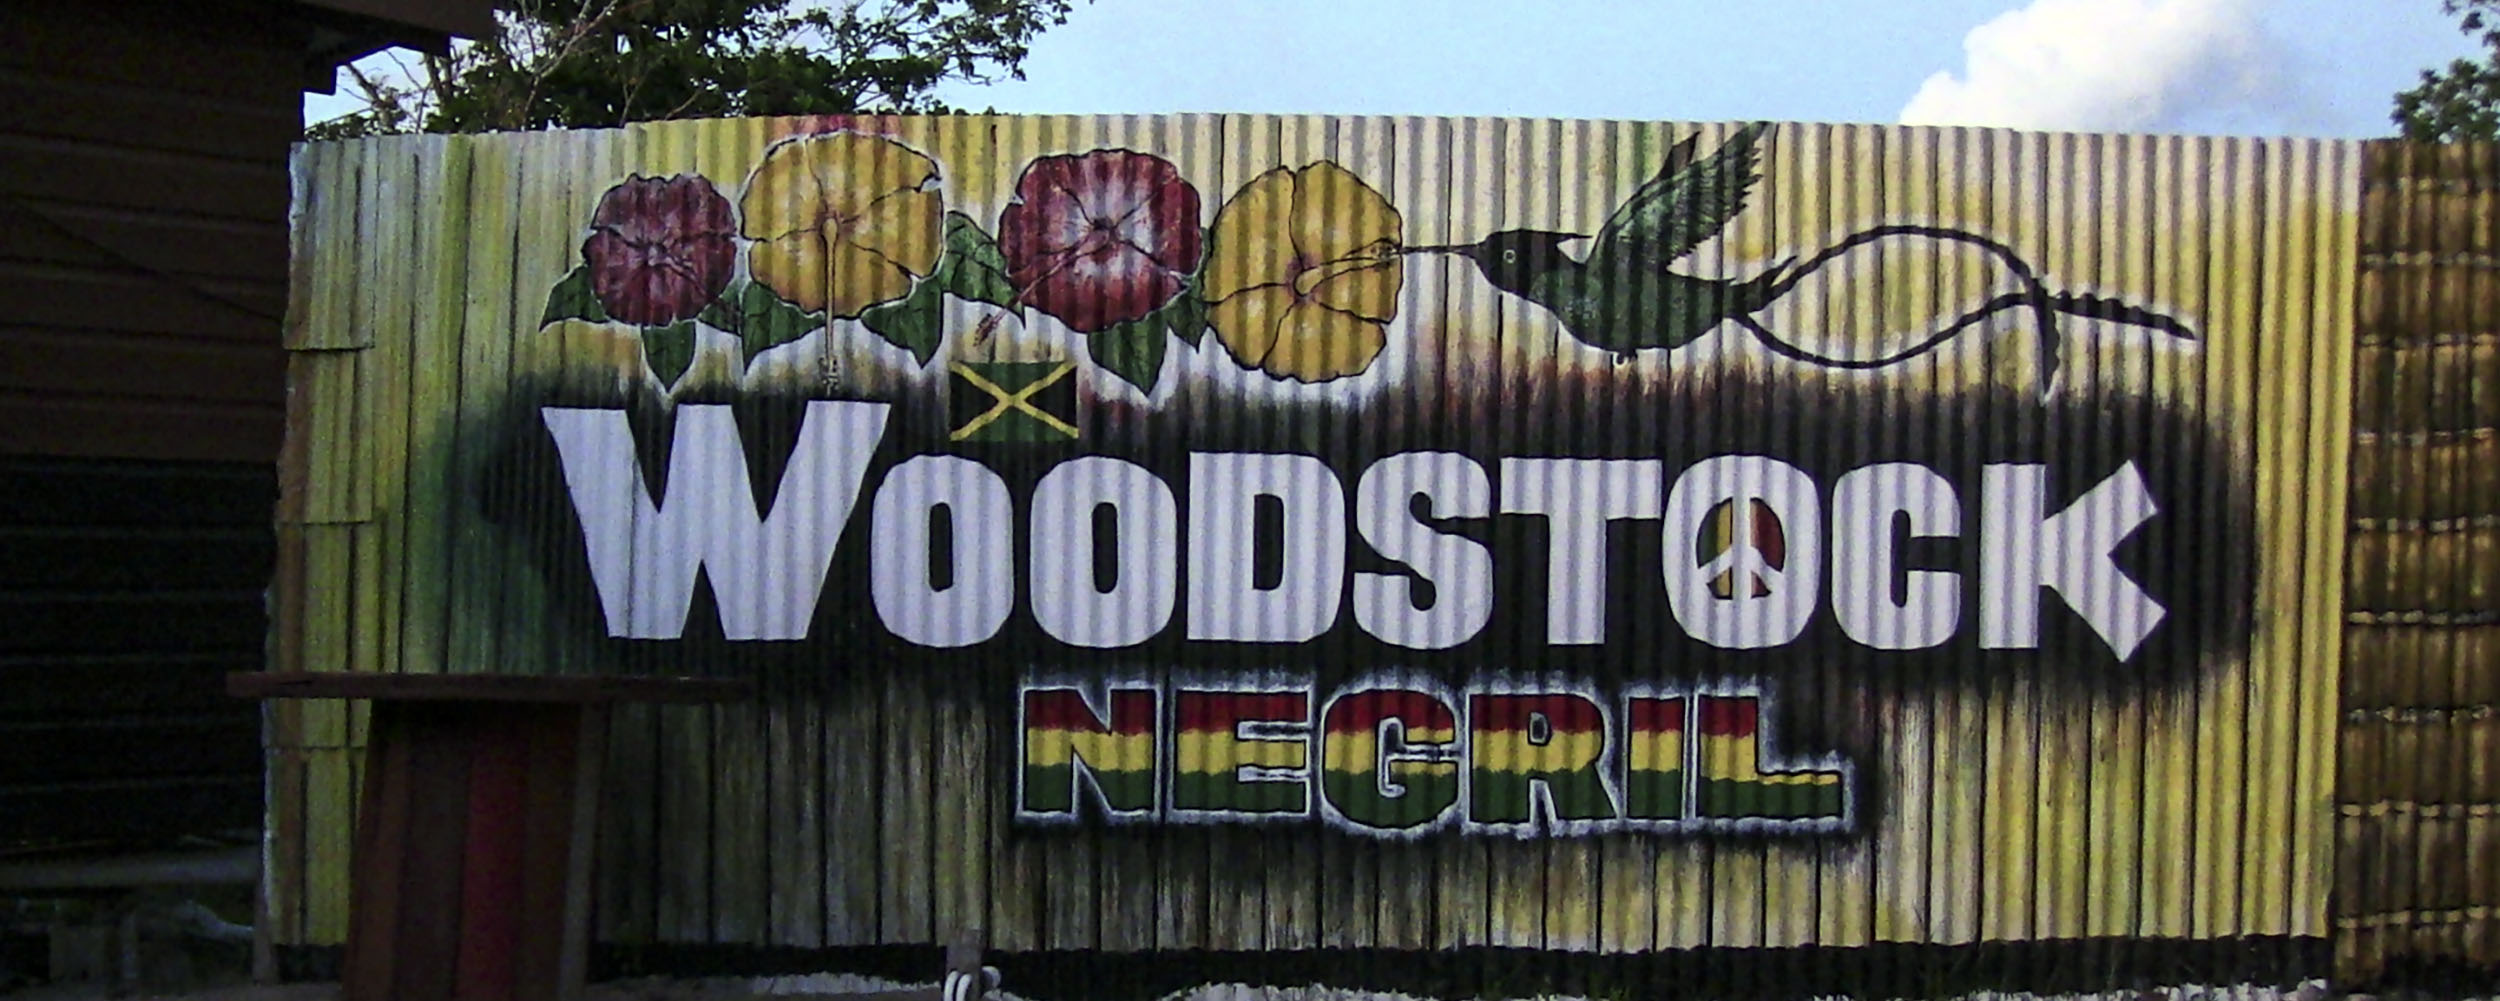 Woodstock Negril, Norman Manley Boulevard - Negril Jamaica